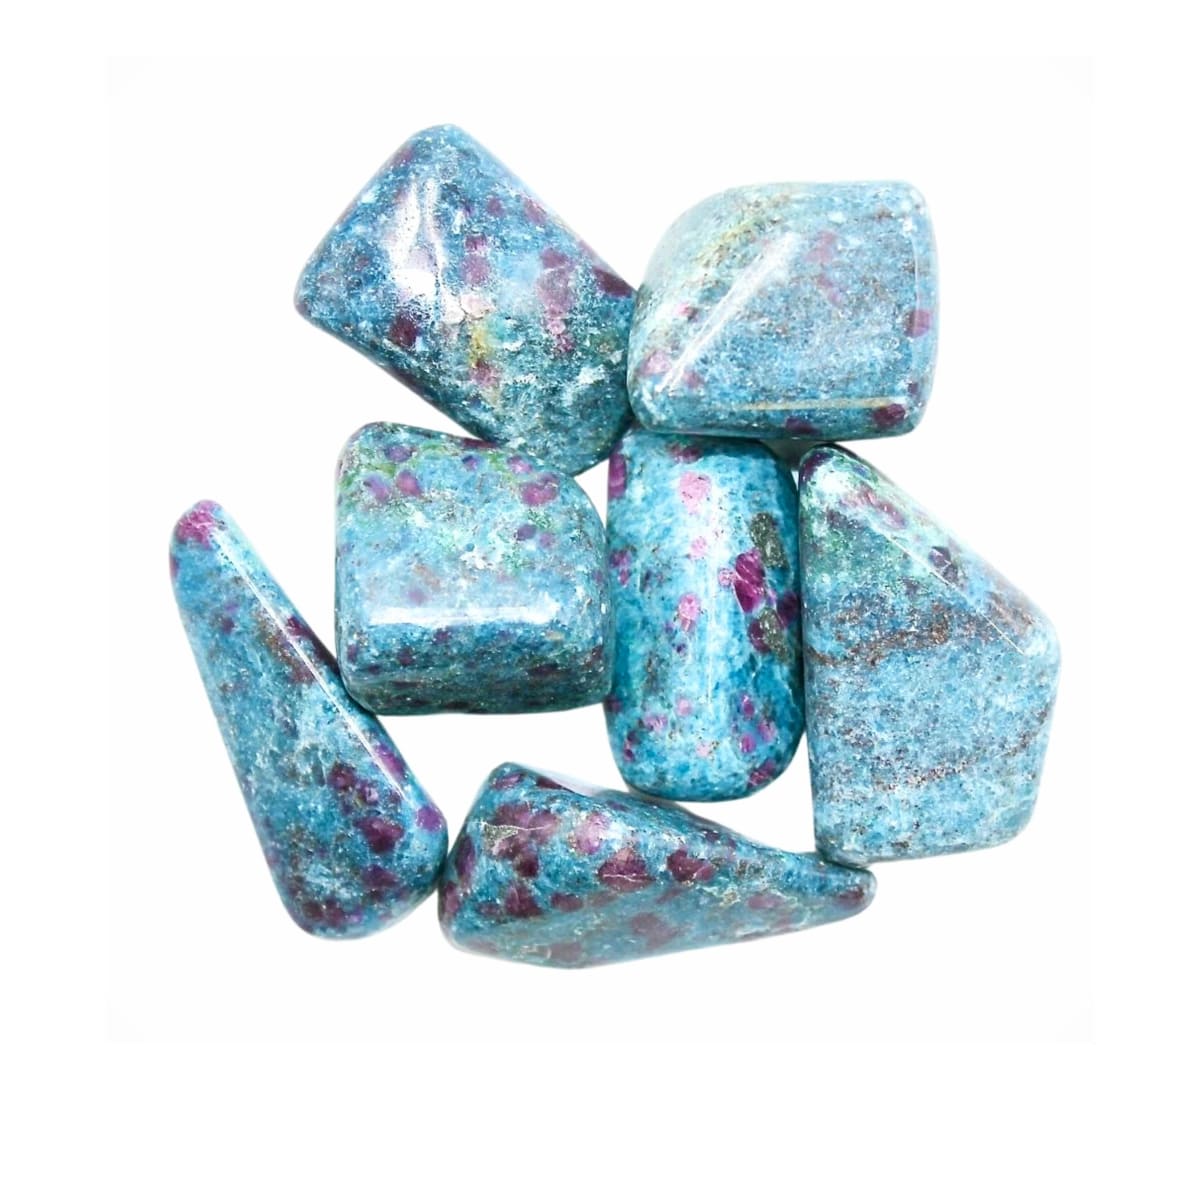 Ruby Kyanite Tumbled Crystals